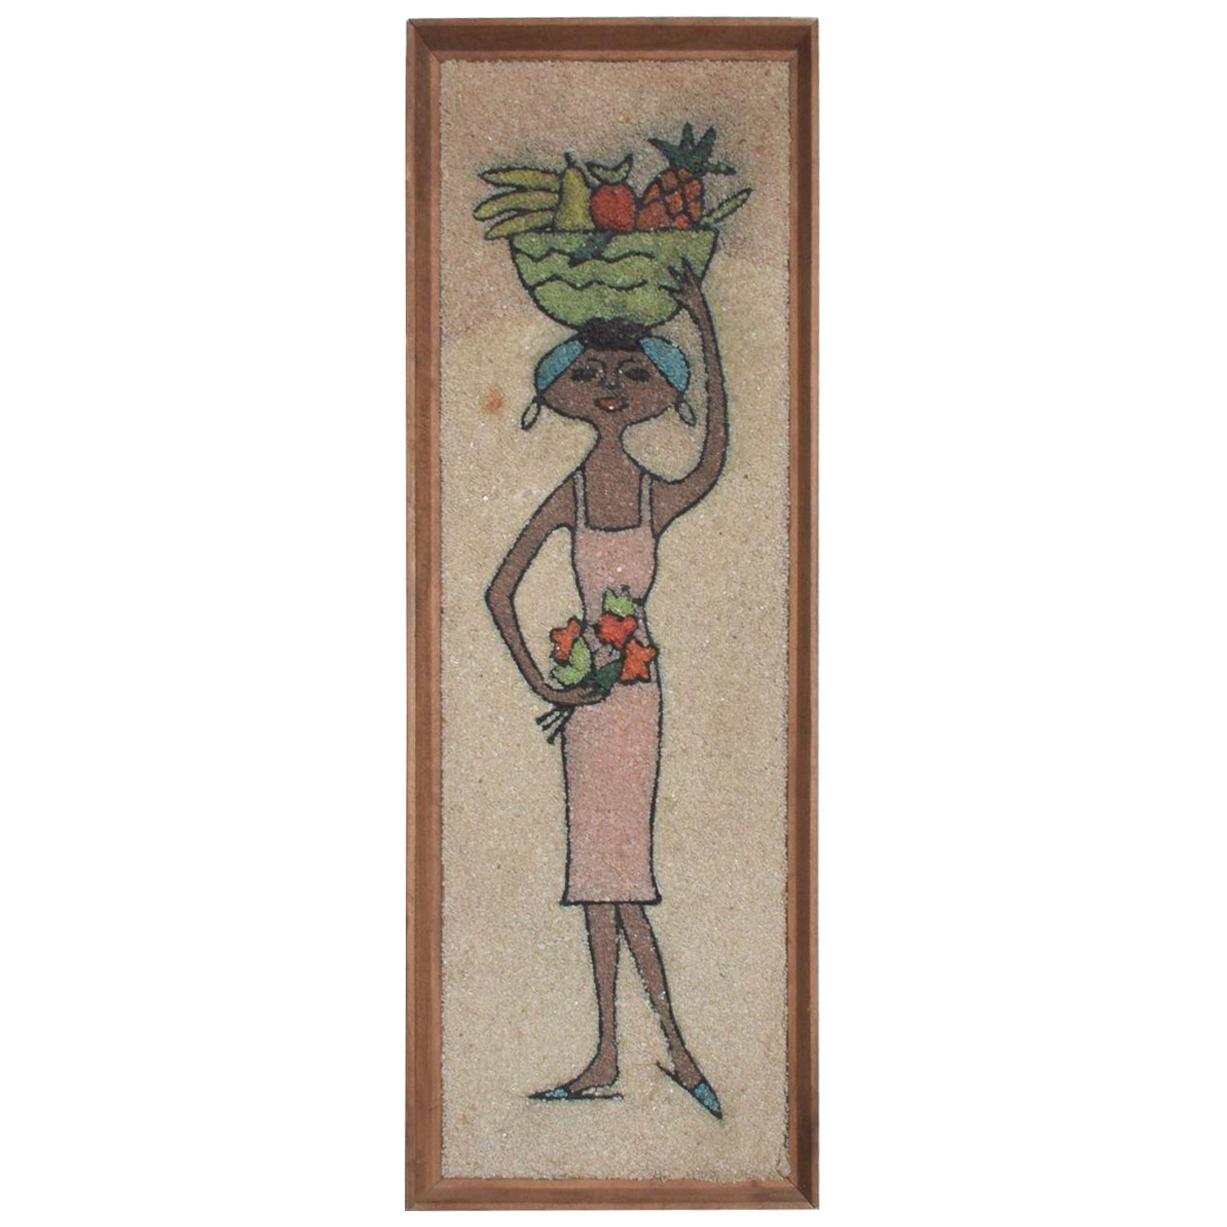 Stone Wall Art Mixed Media Woman Fruit Basket on Head Folk Art Mexico 1960s